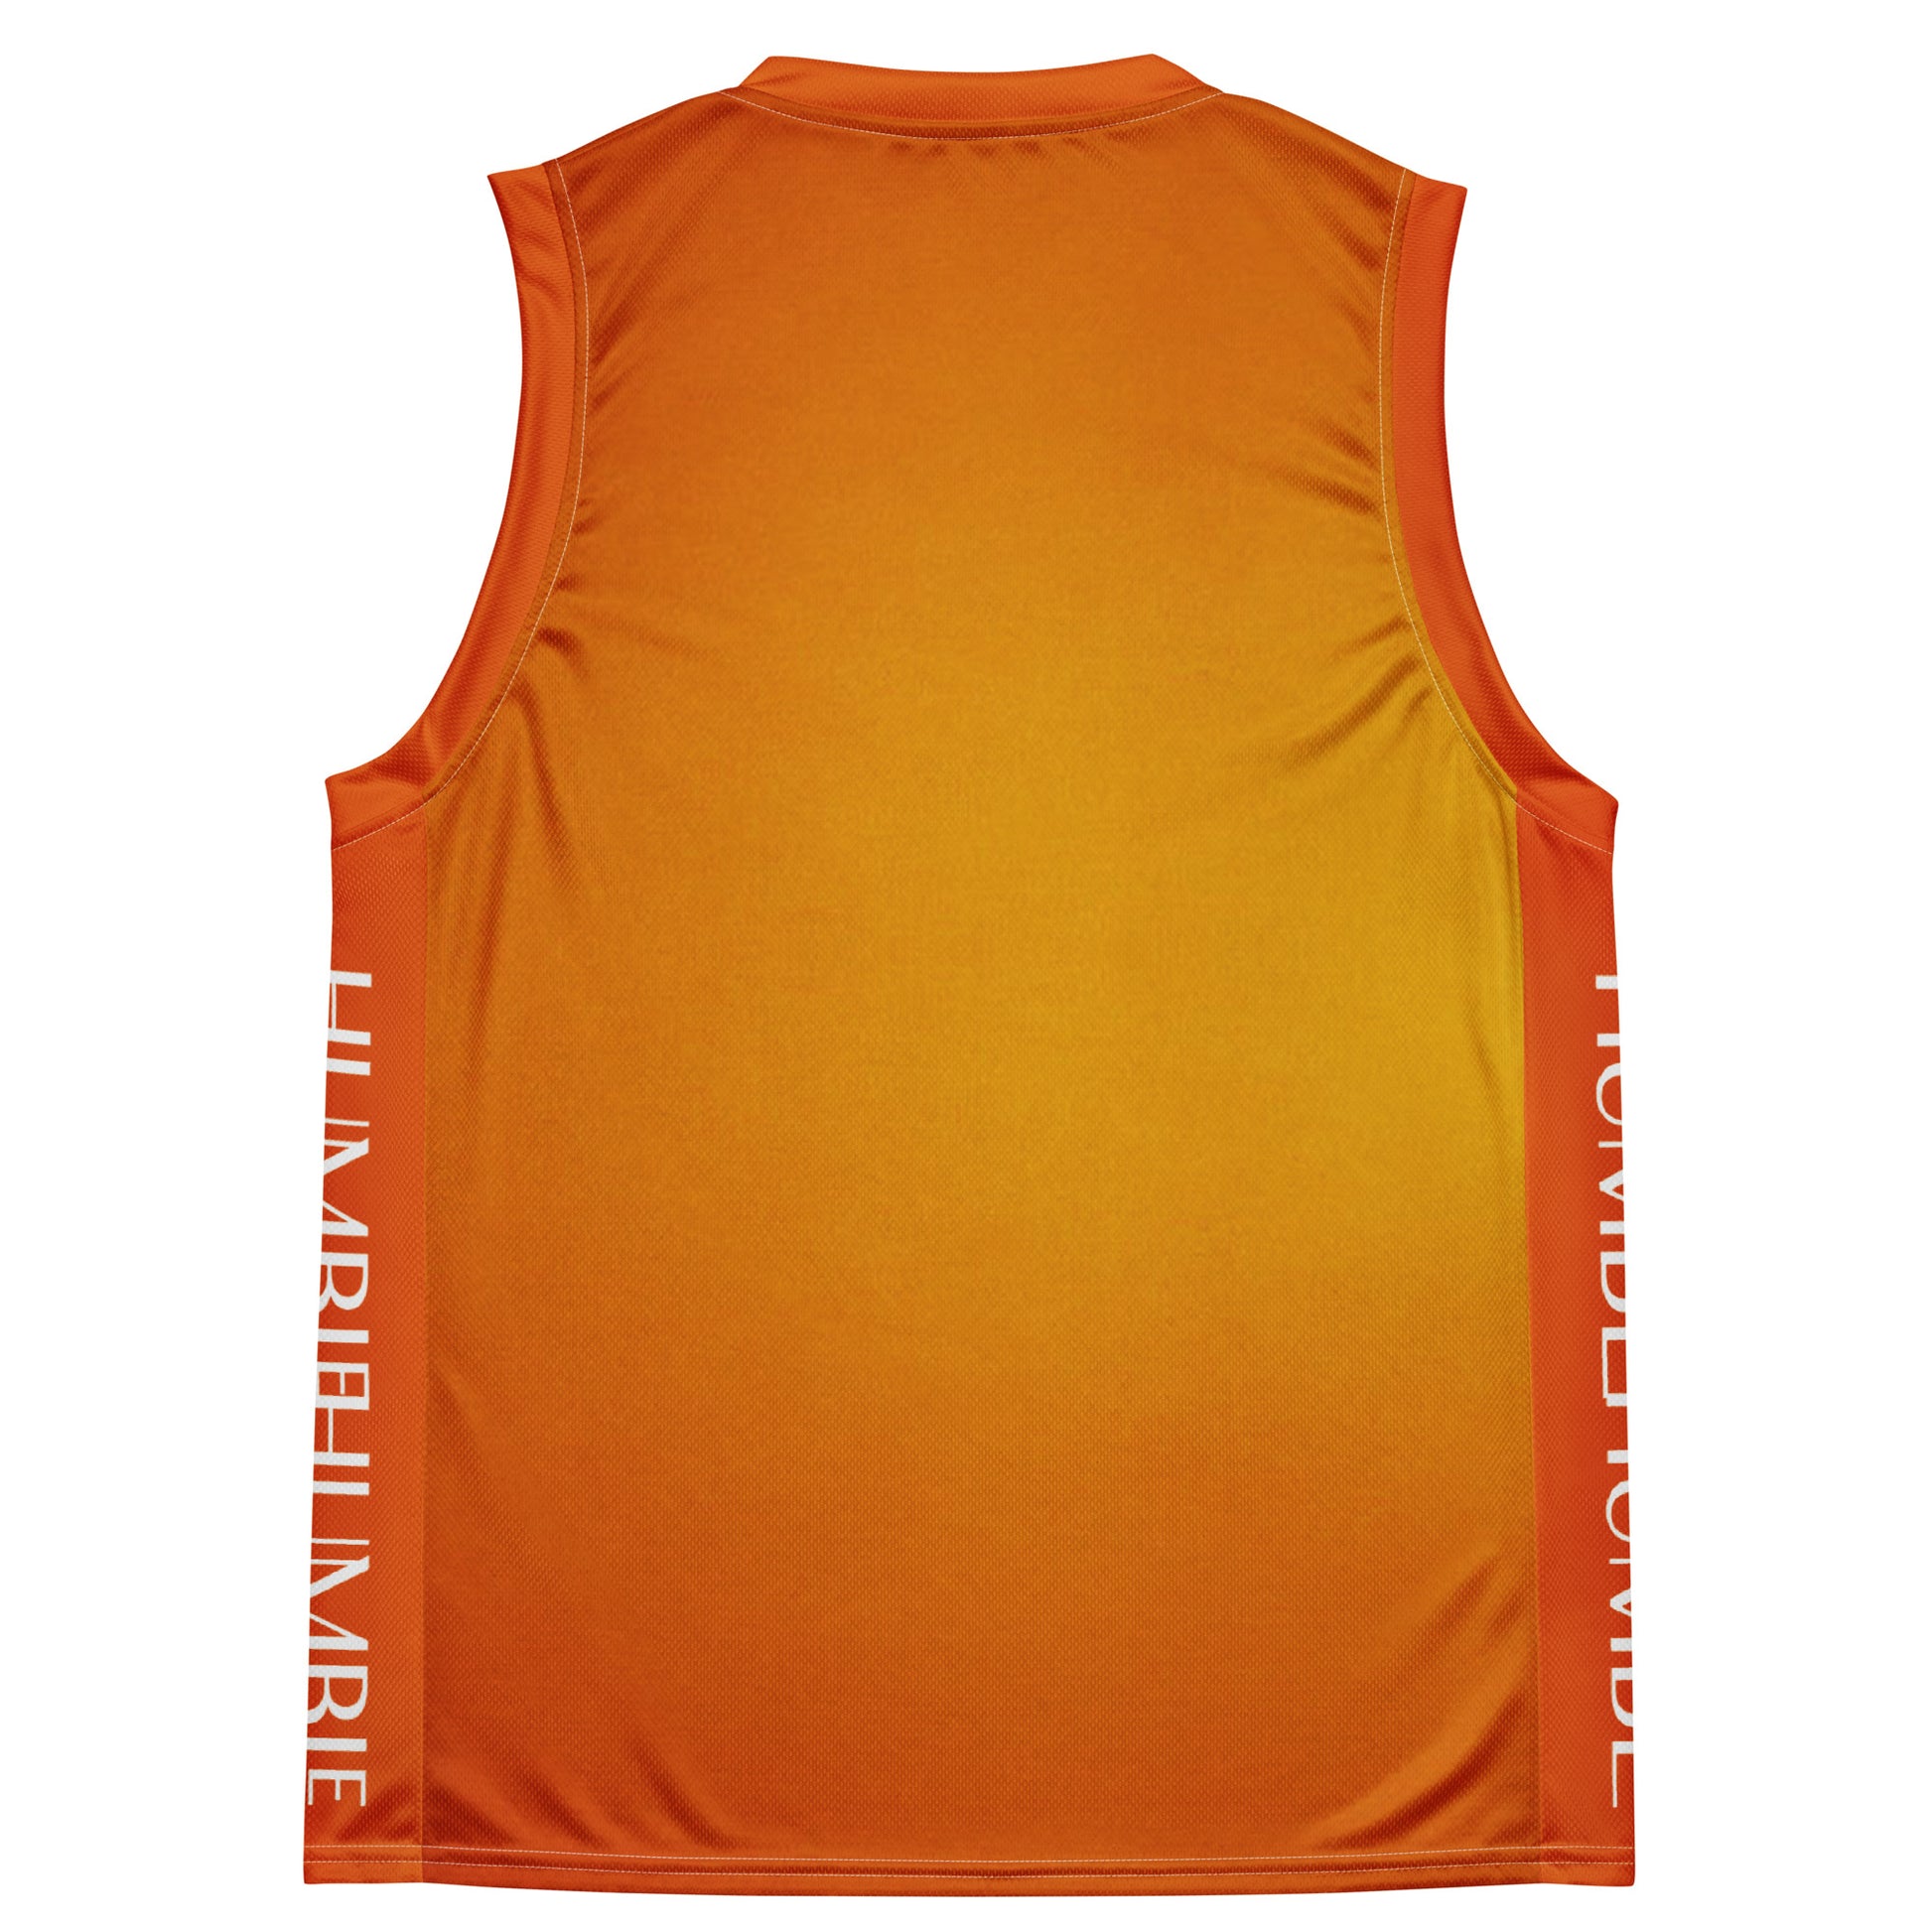 Humble Sportswear, men's basketball jerseys, gradient mesh workout tops for men